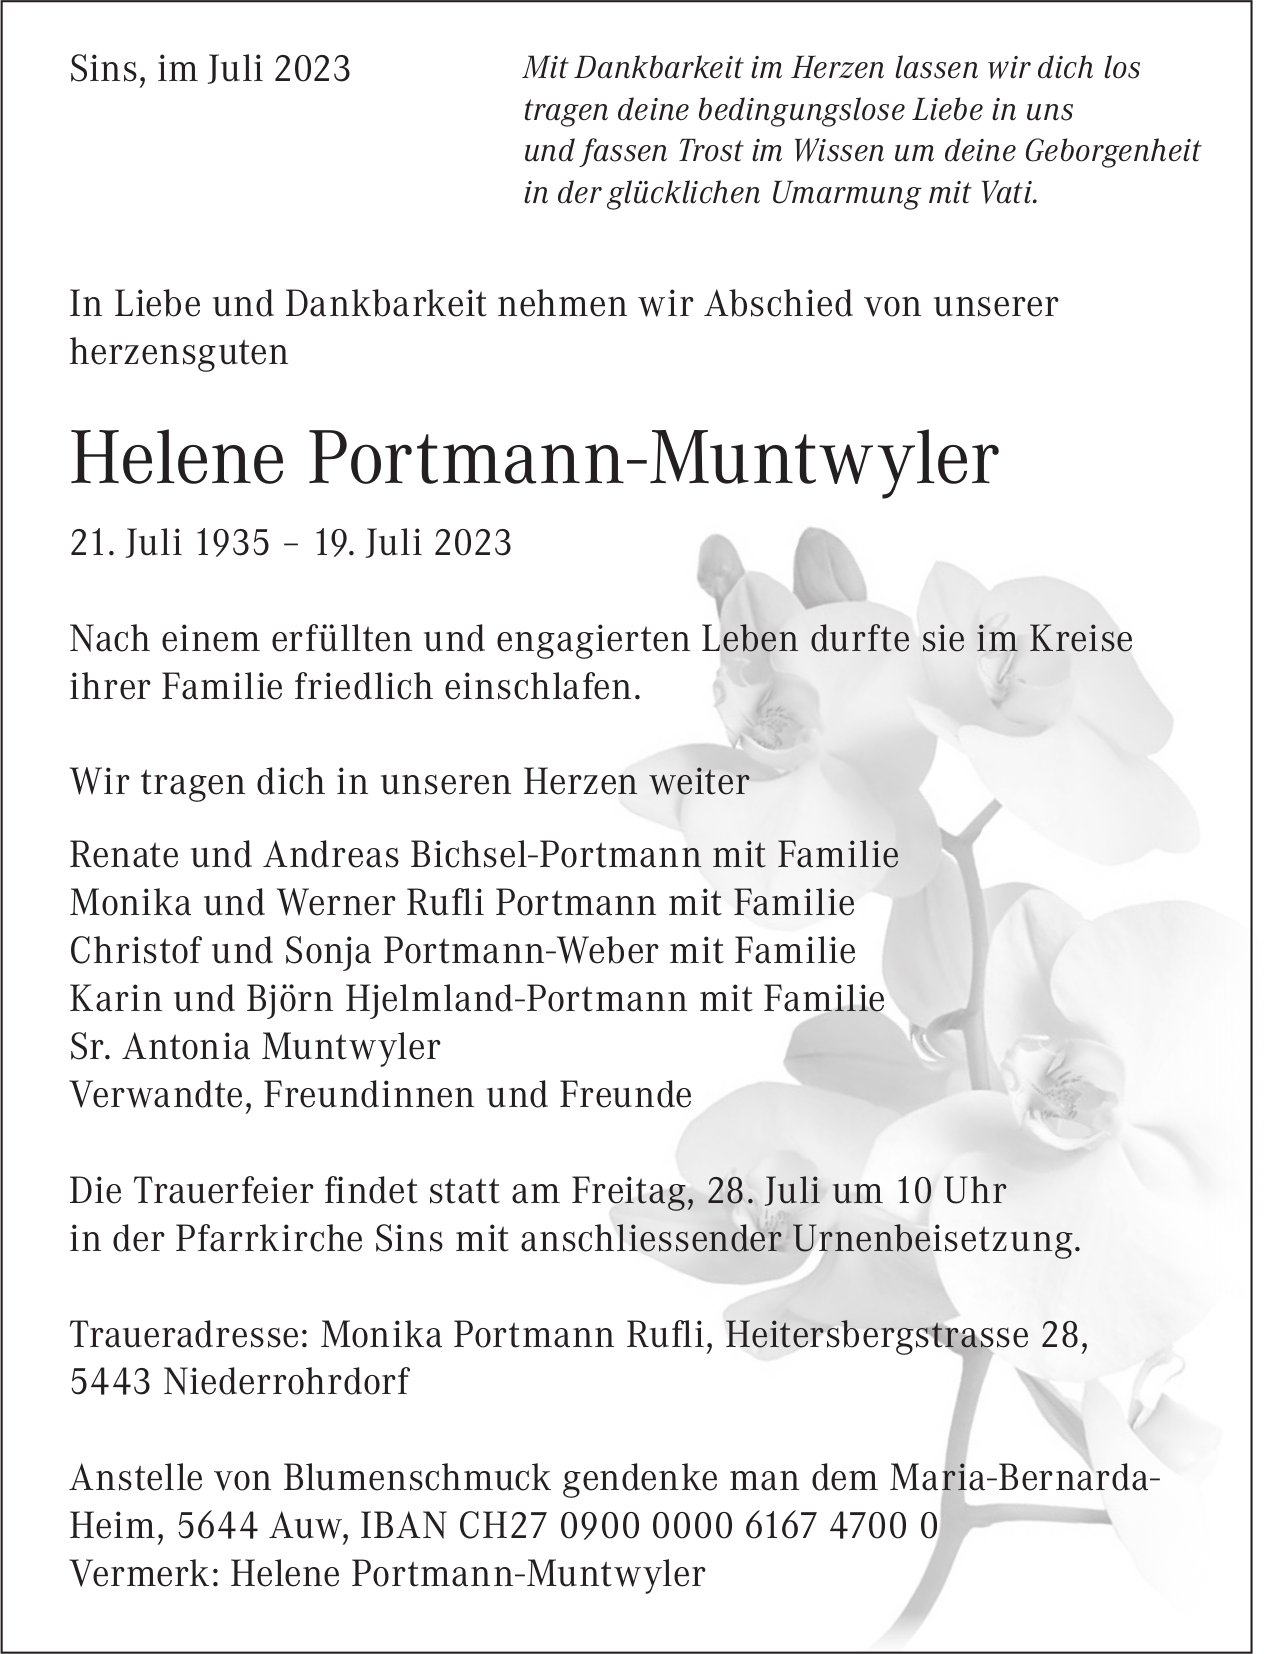 Portmann-Muntwyler Helene, Juli 2023 / TA